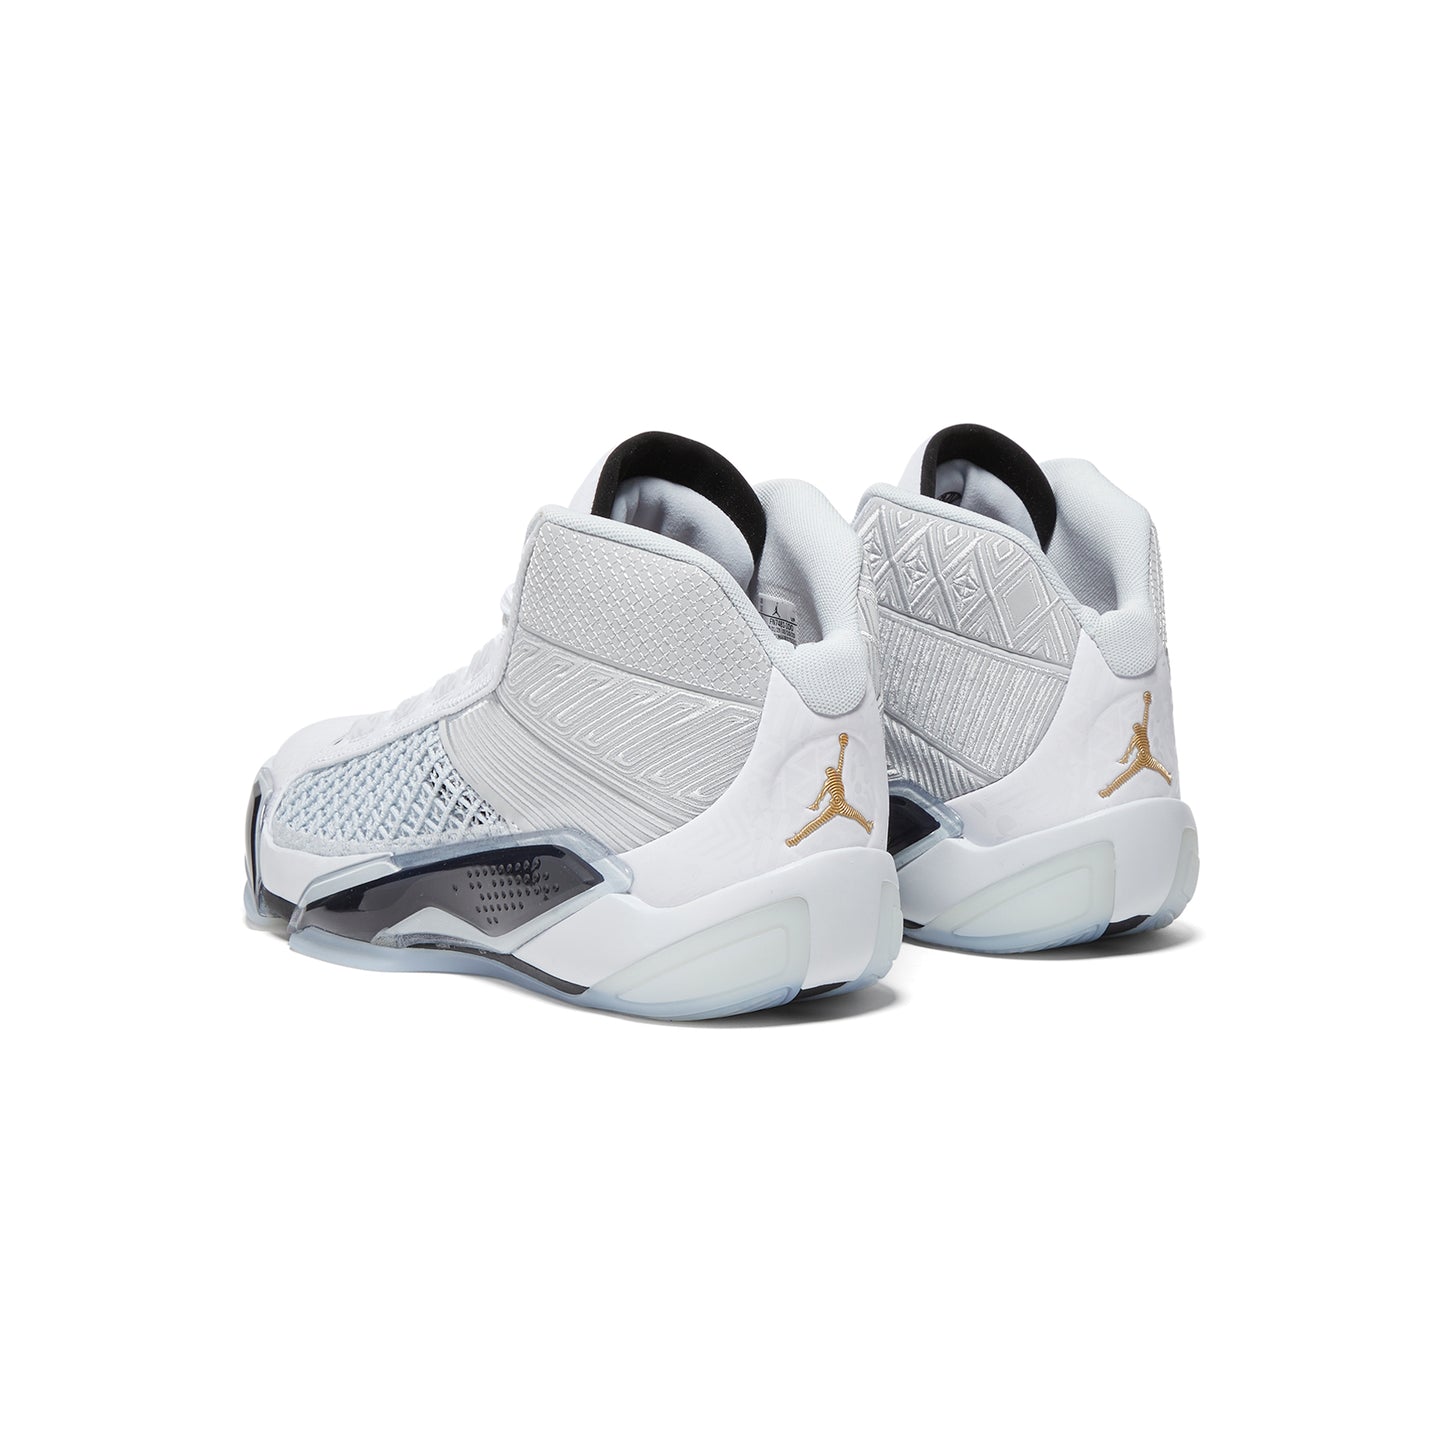 Nike Air Jordan XXXVIII FIBA (White/Metallic Gold/Pure Platinum)